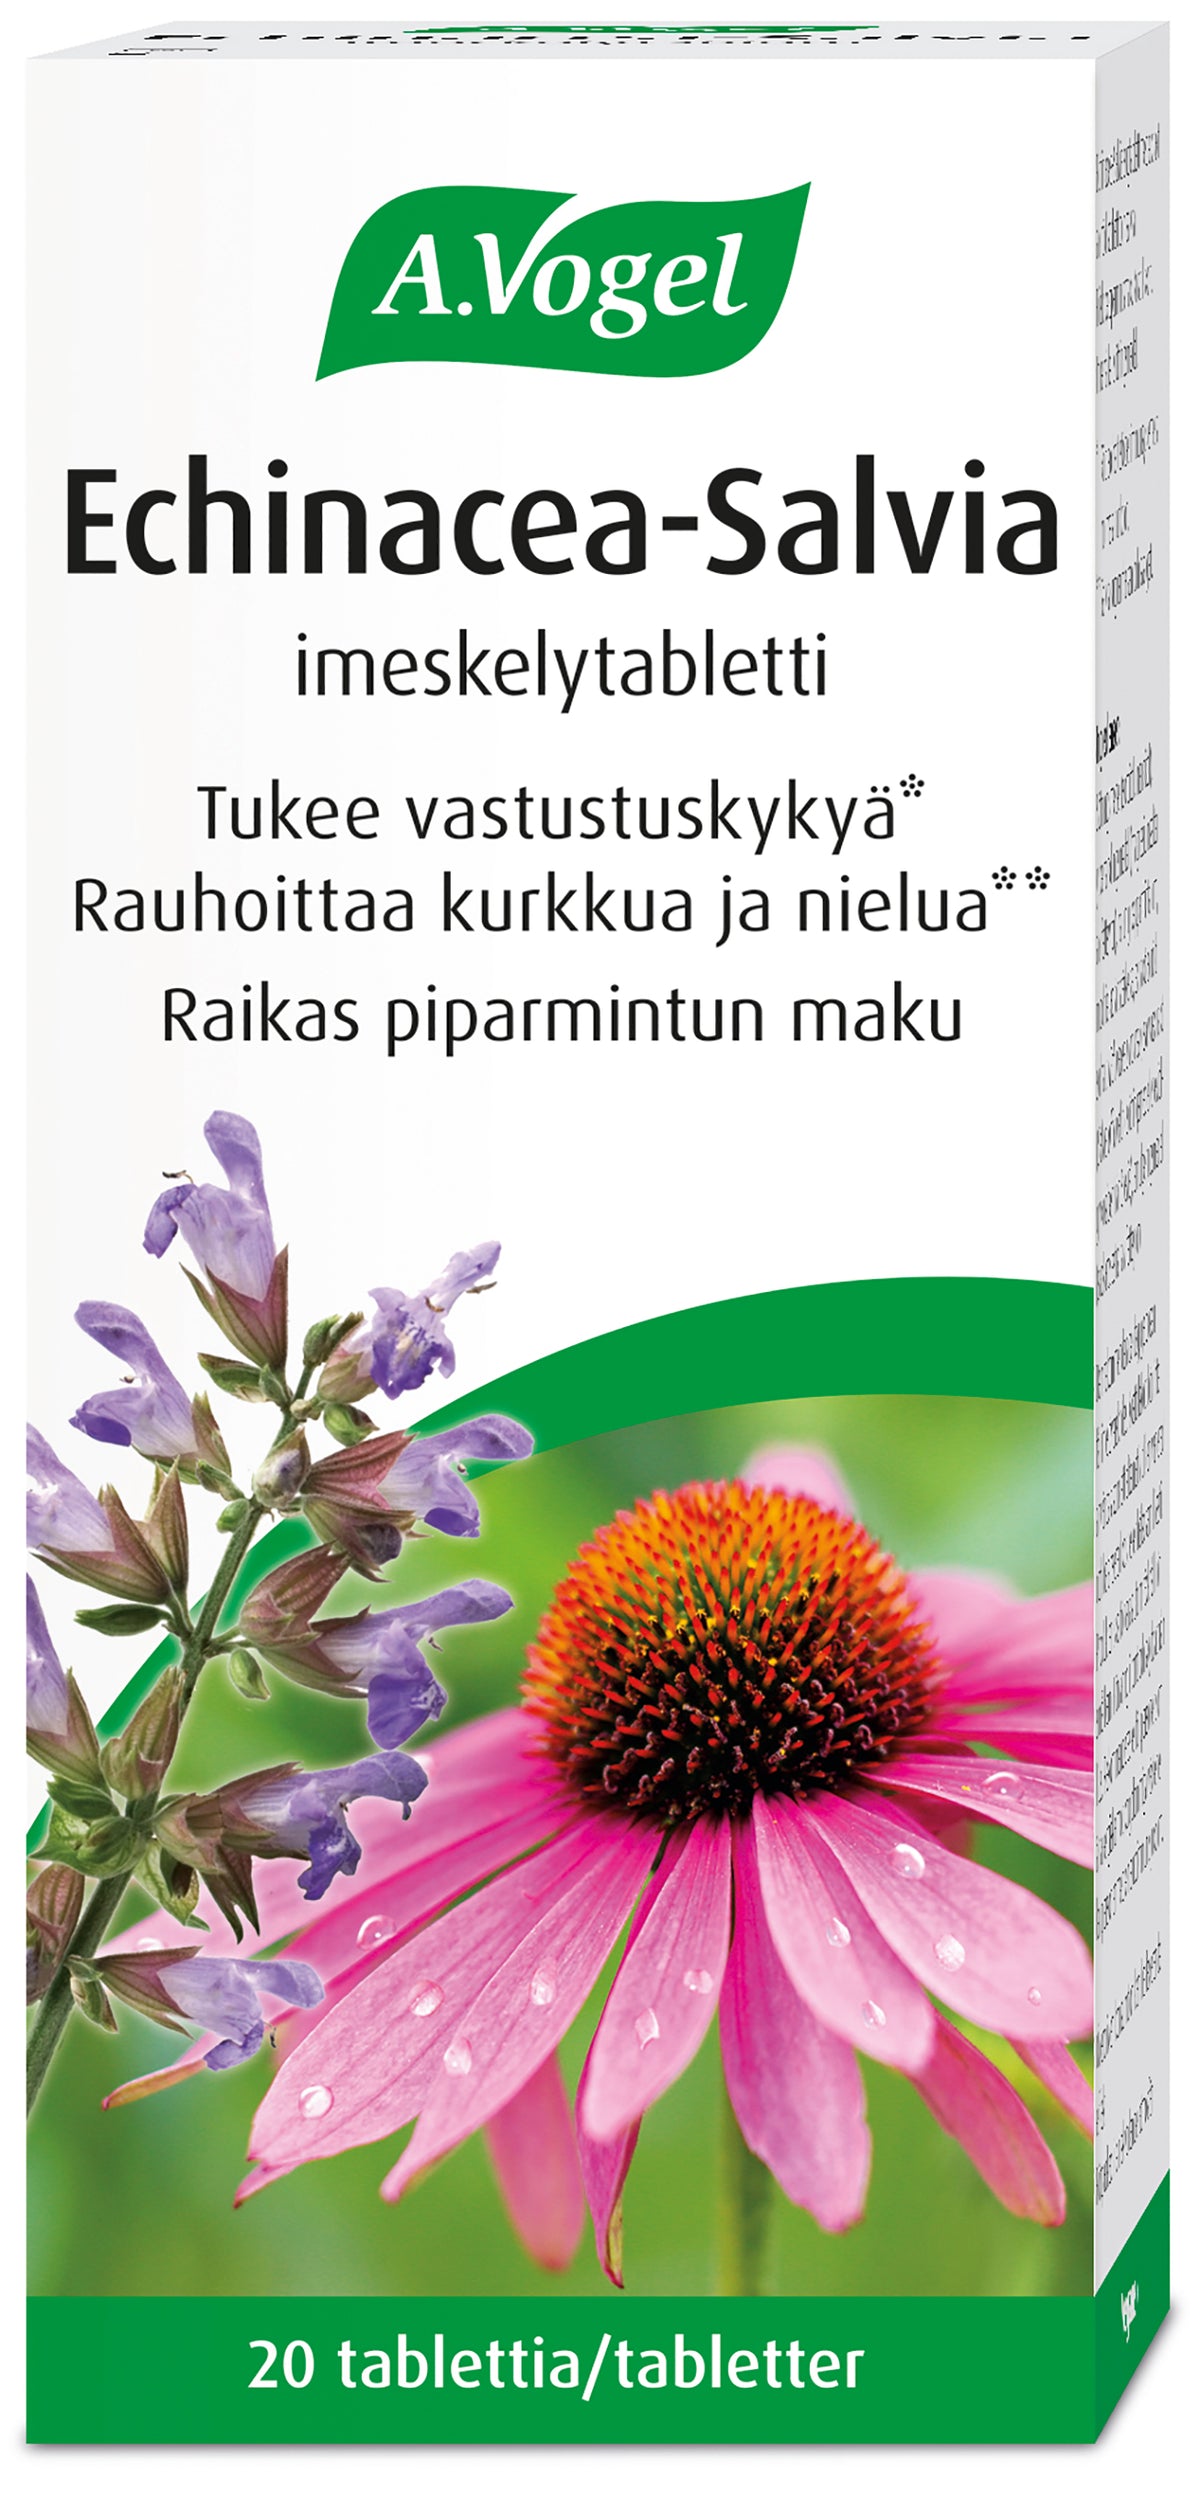 A.Vogel Echinacea-Salvia Imeskelytabletti 20 tabl.